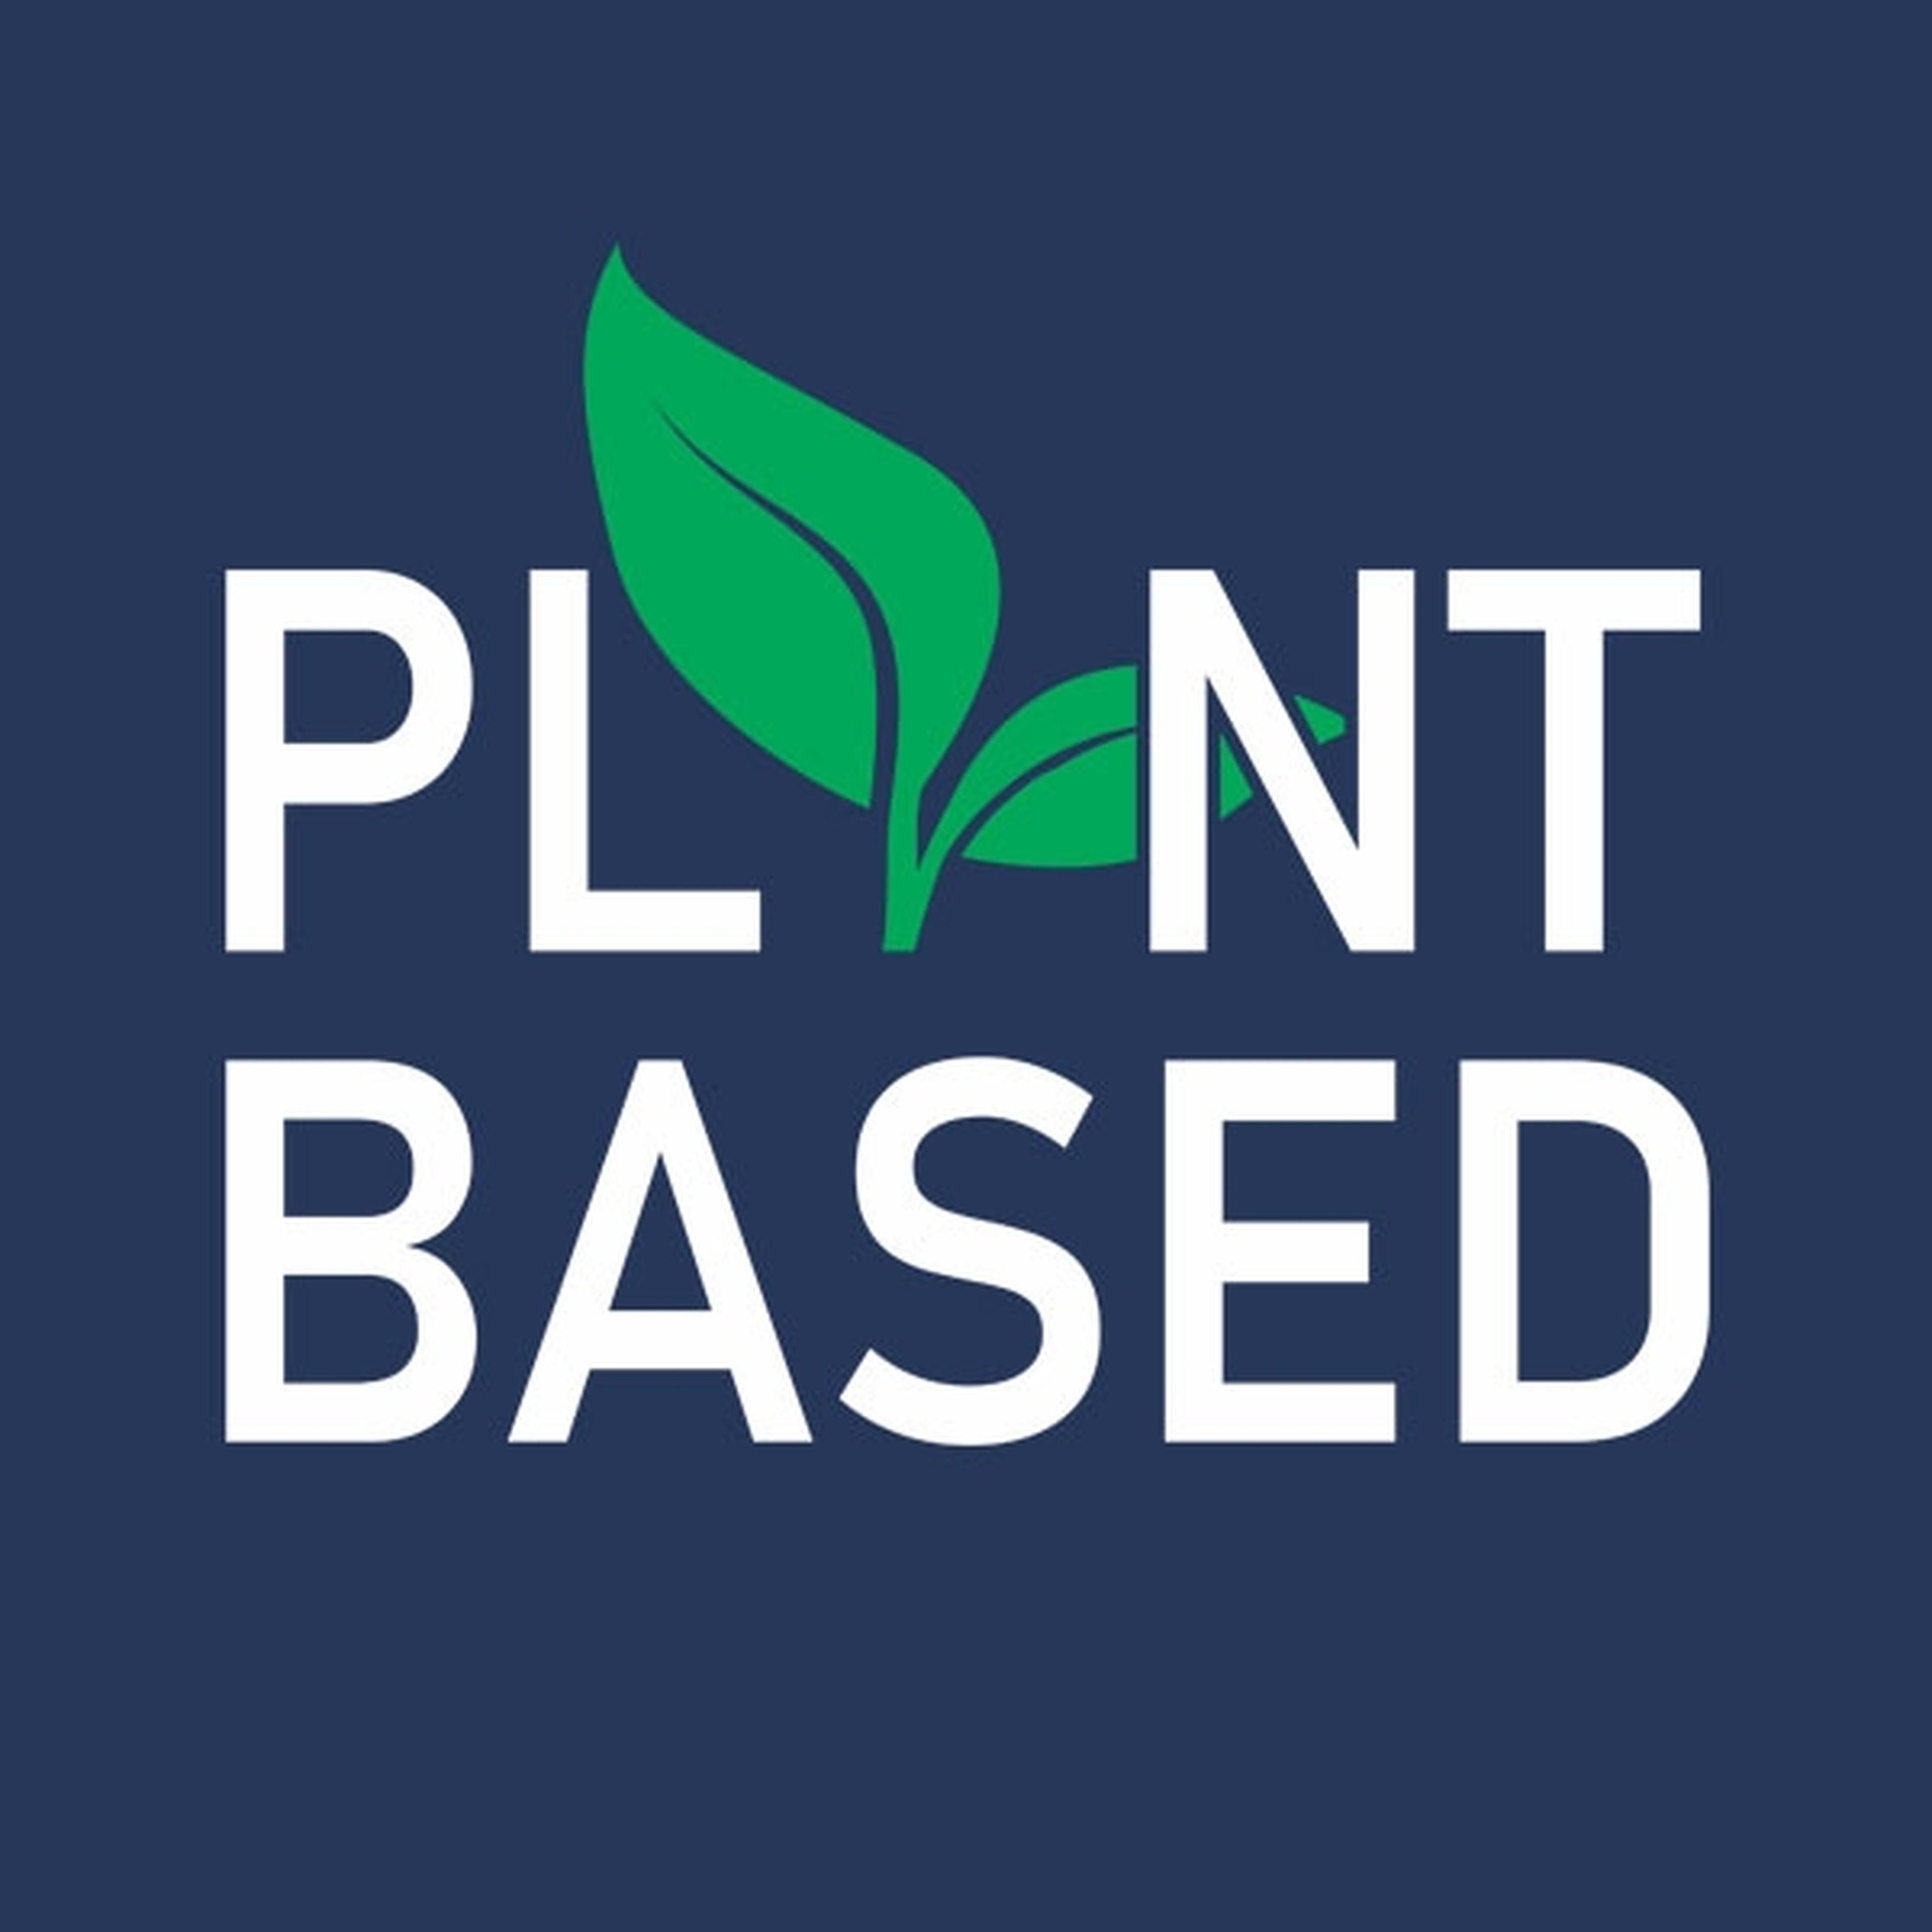 Plant based - T-shirt